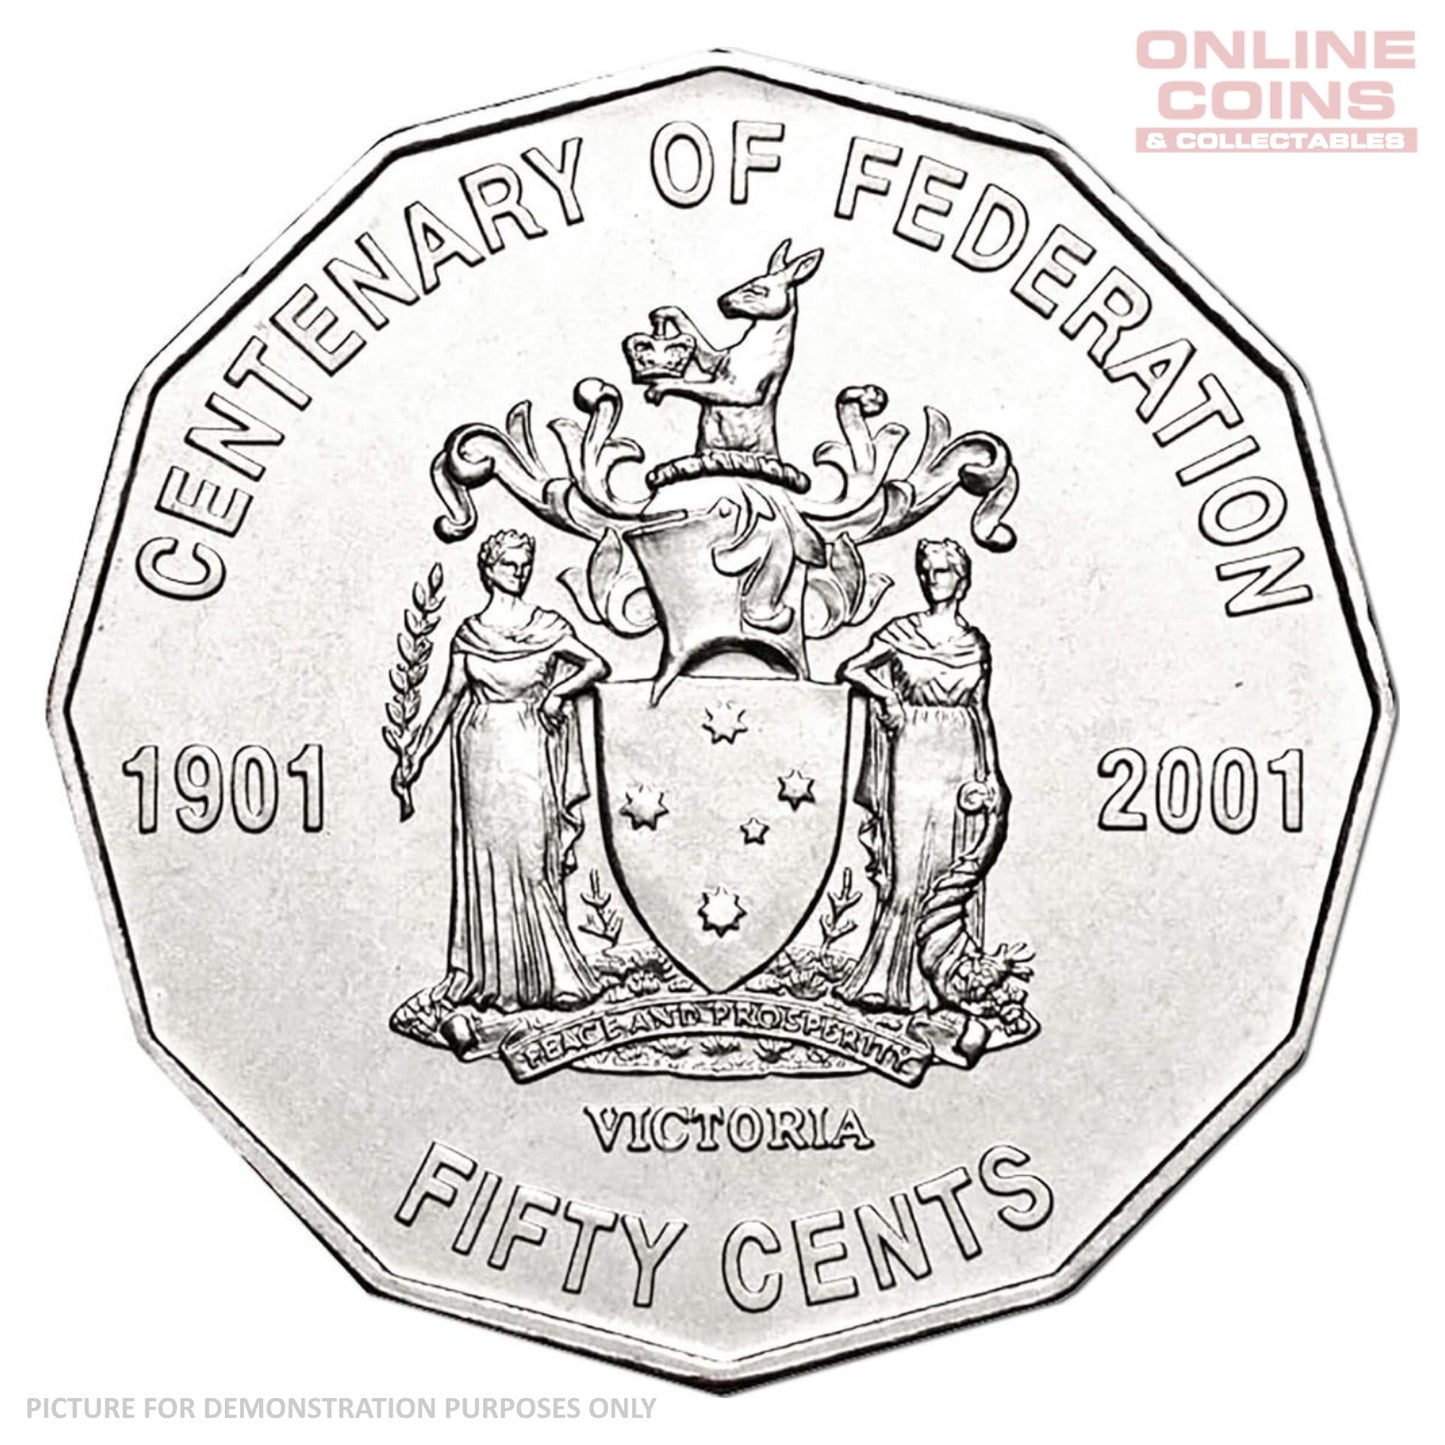 2001 RAM Centenary of Federation 50c Circulating Coin - VICTORIA